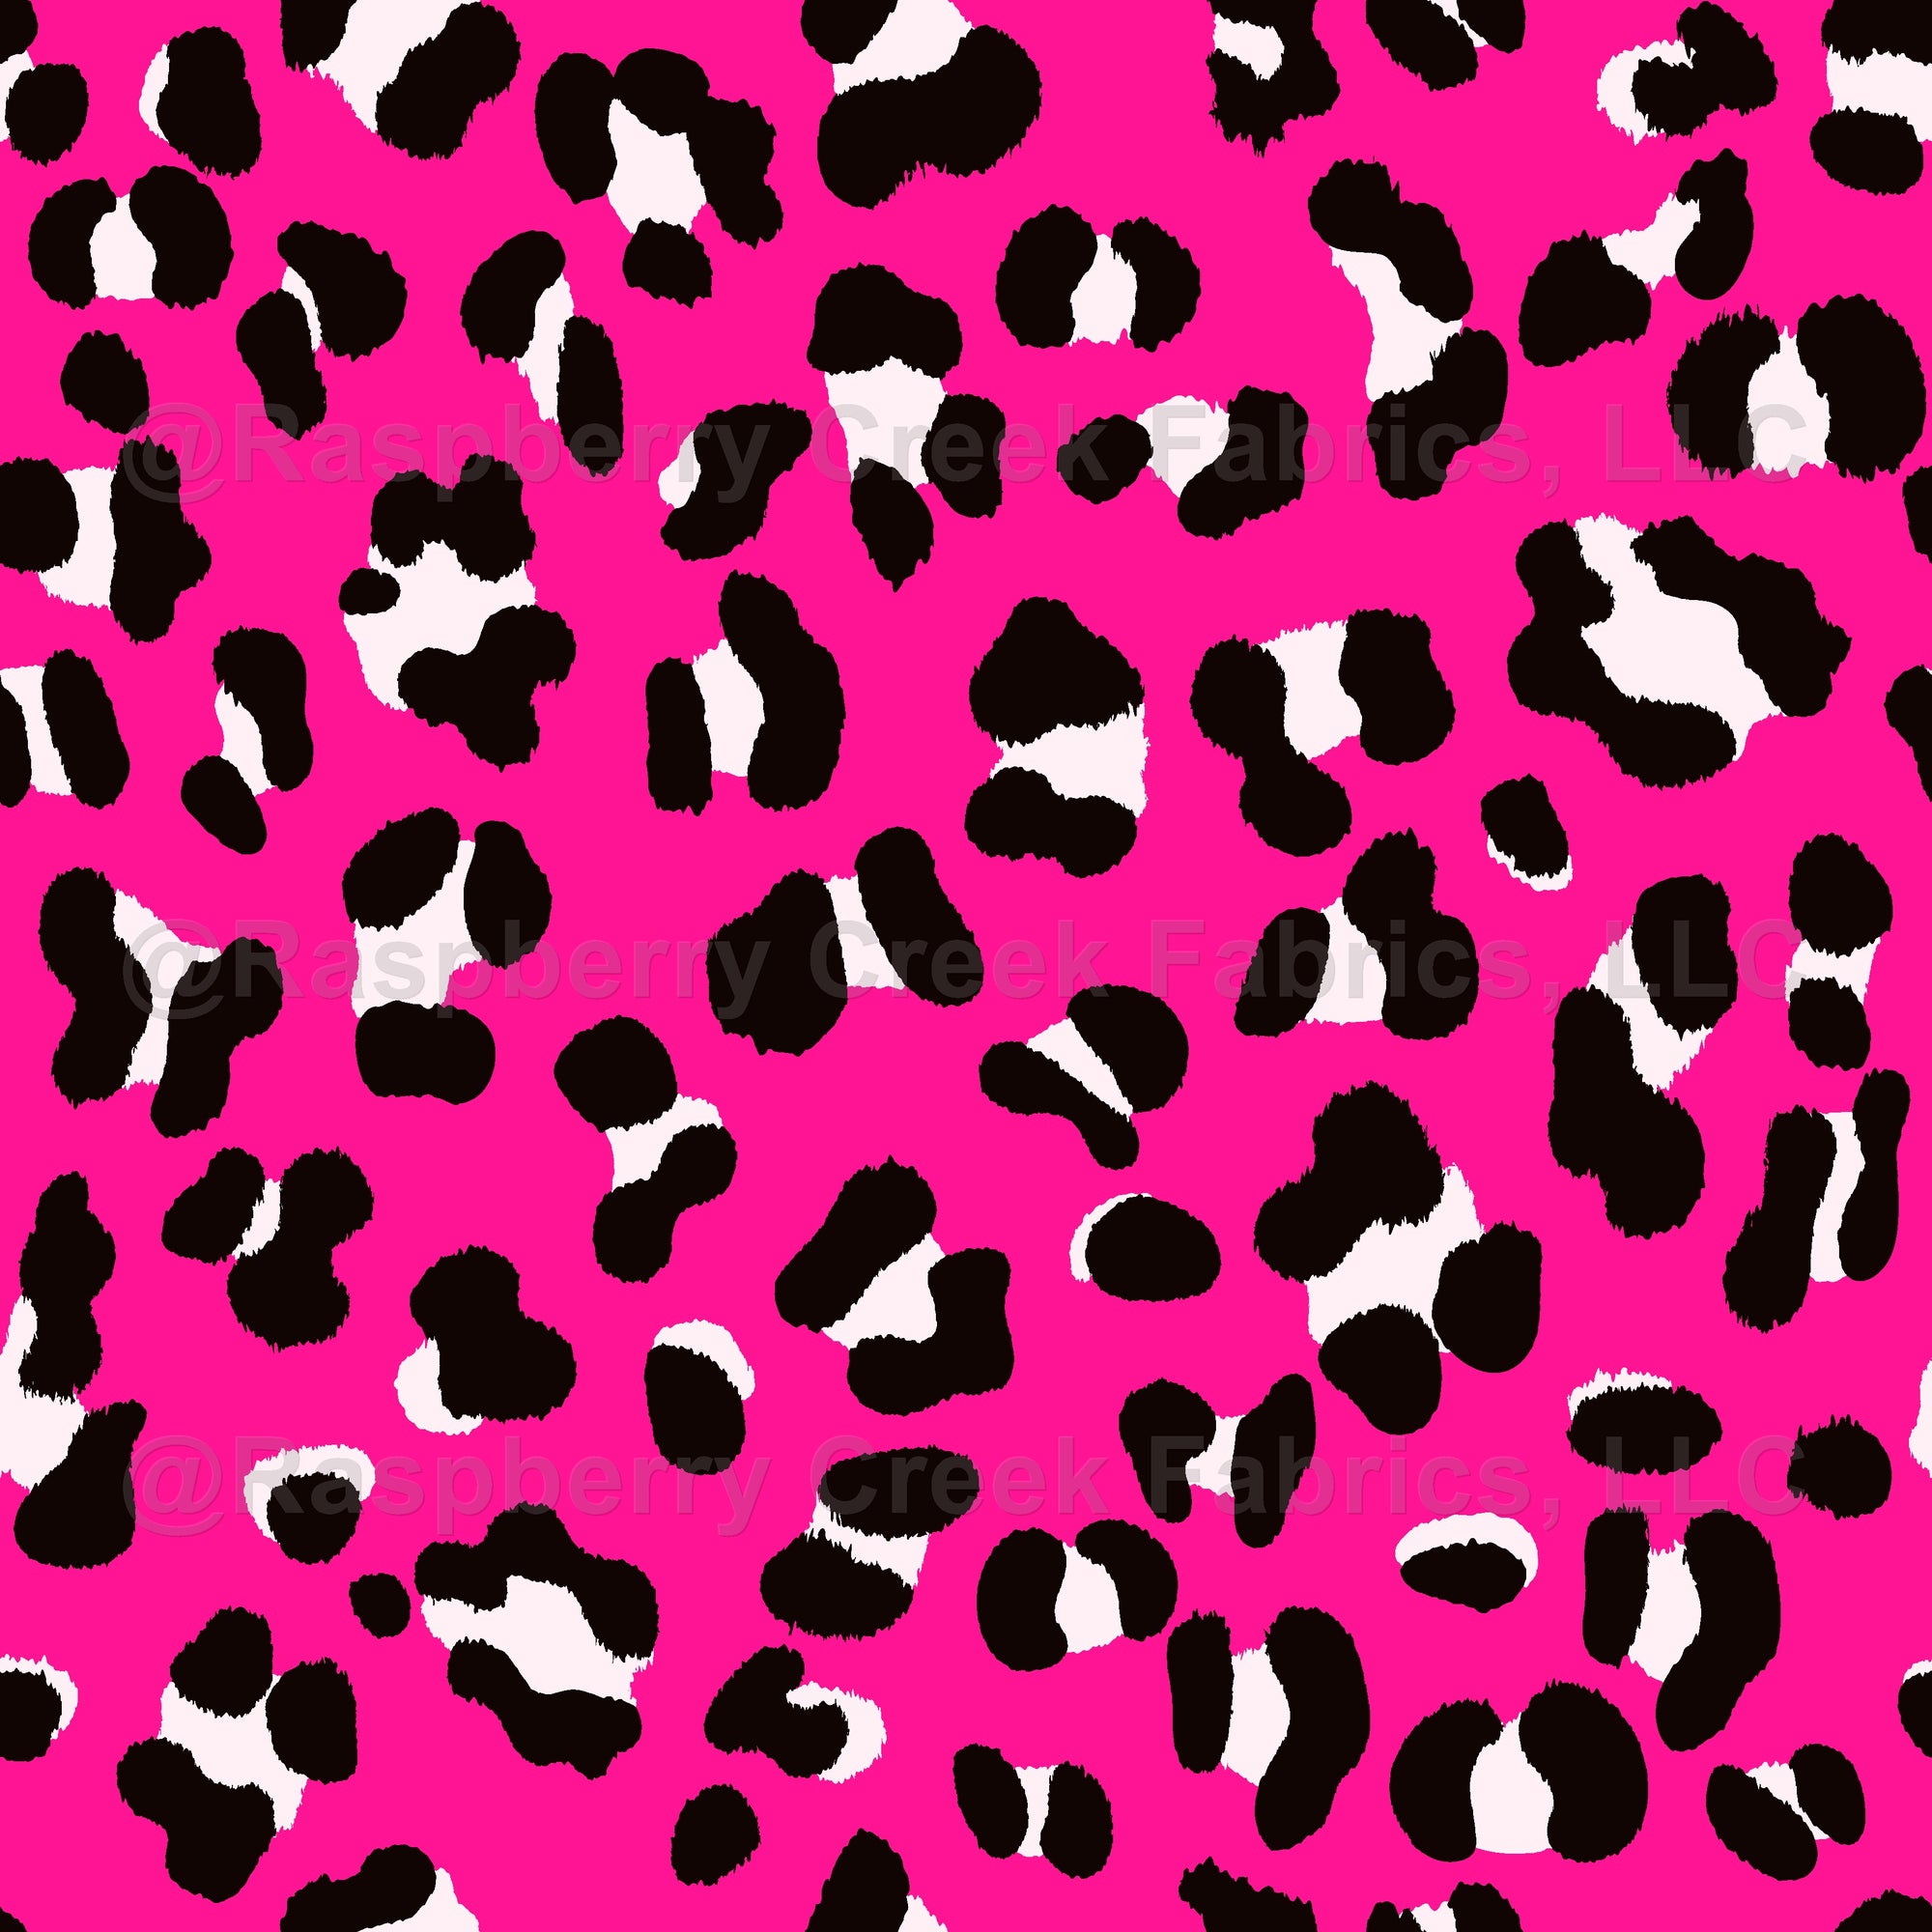 climate right Animal Print Leopard Print Multi Color Black